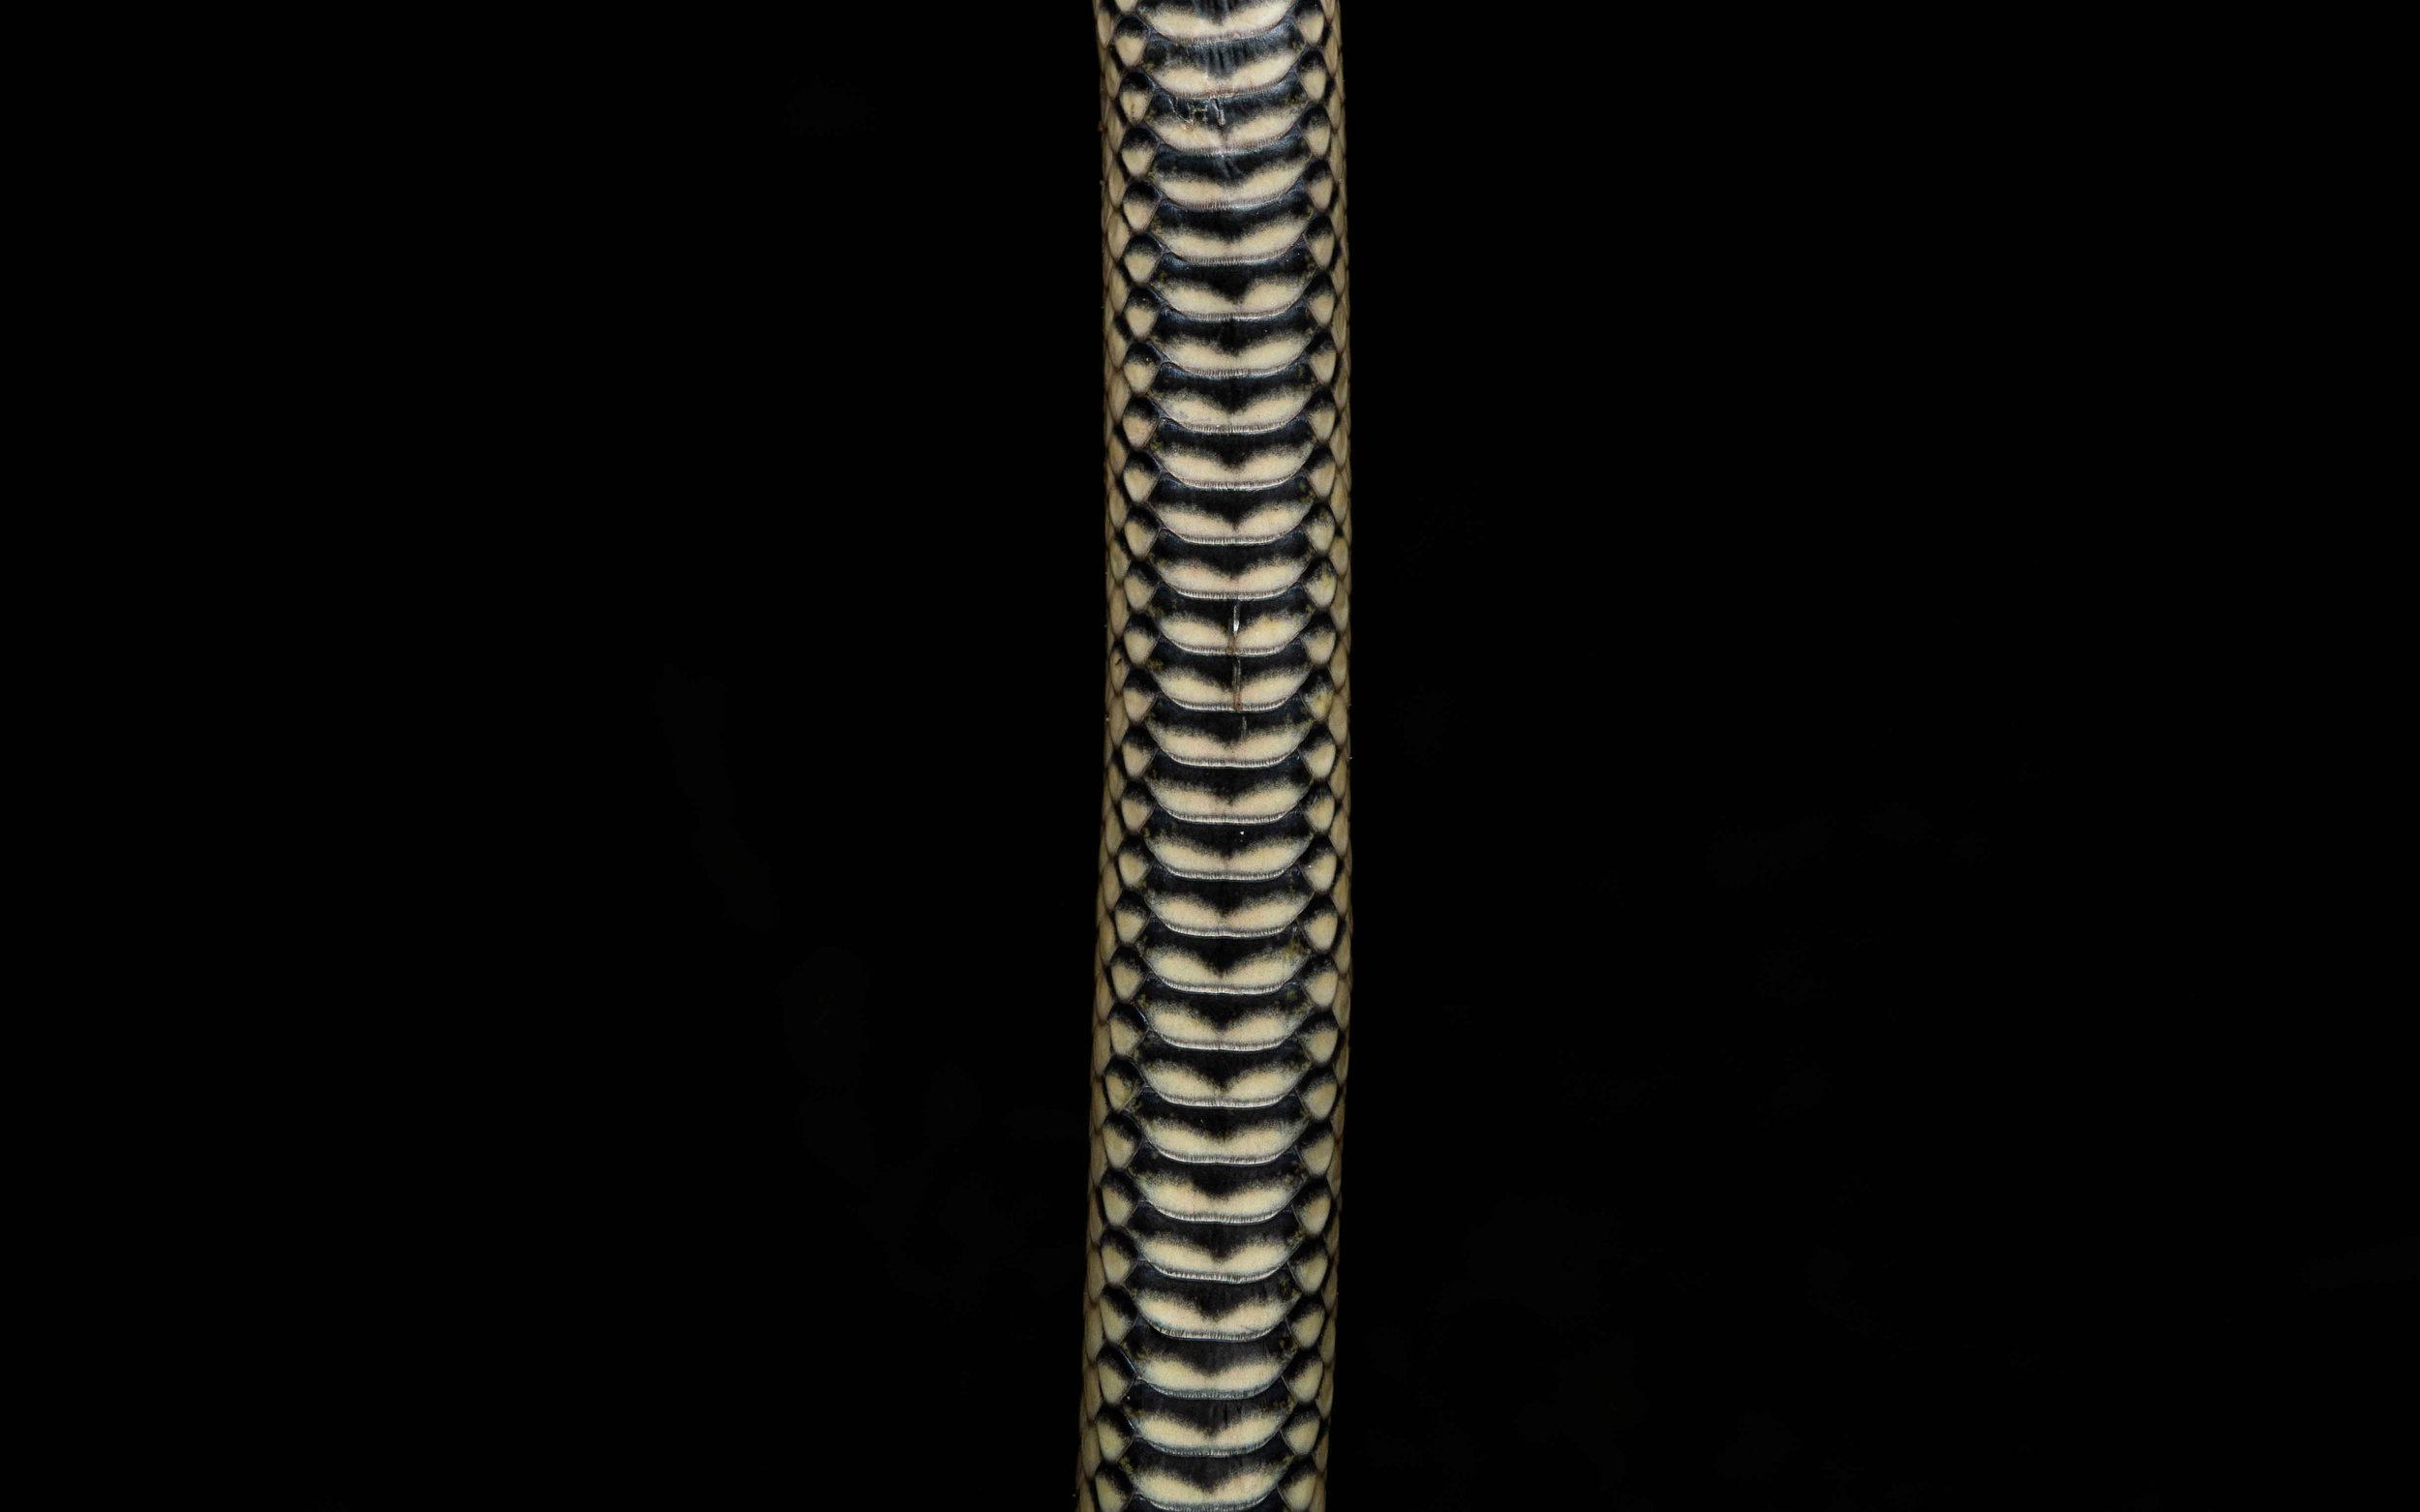 Mangrove Water Snake - Myrrophis bennettii